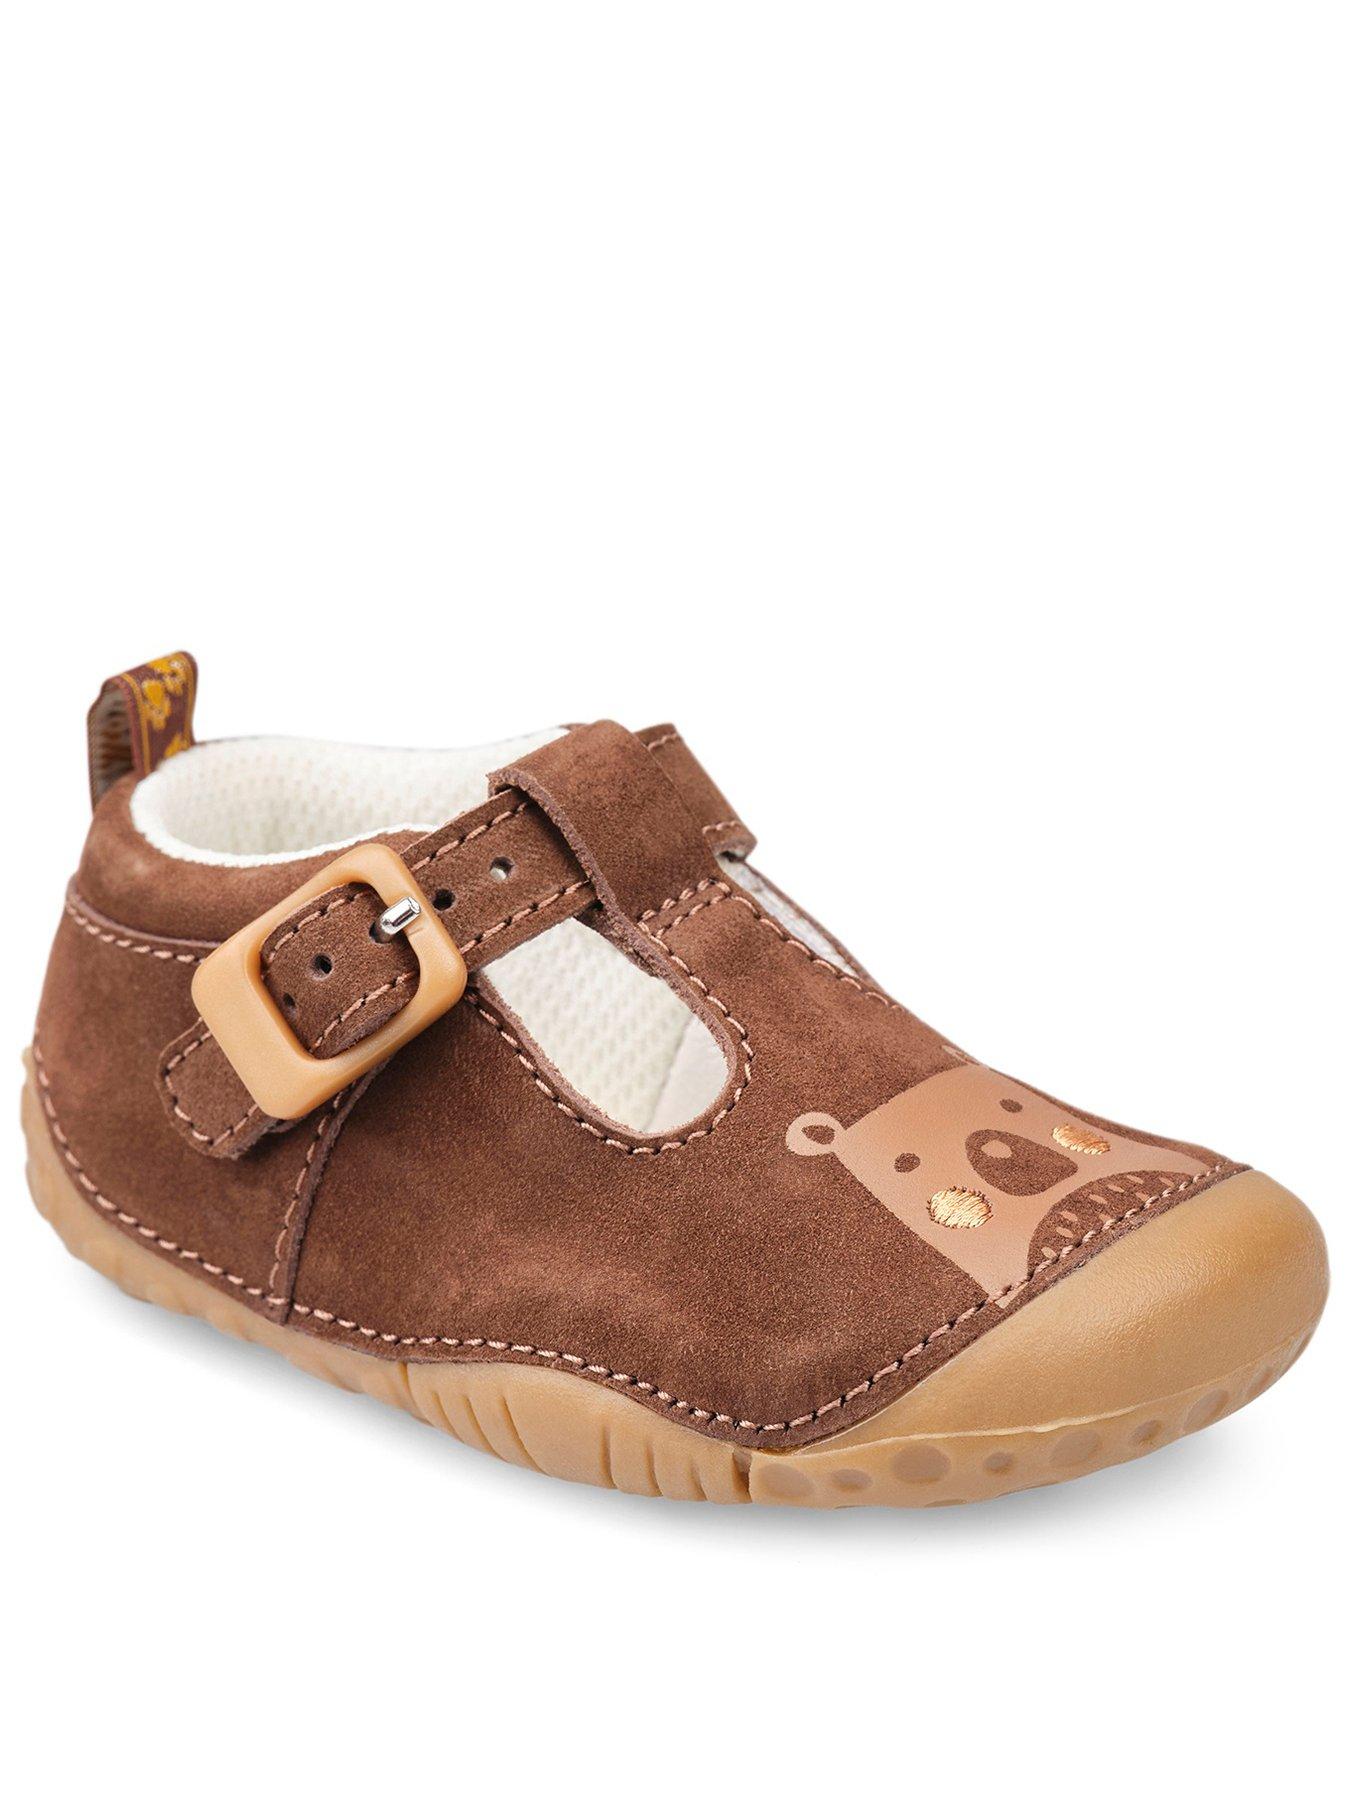 Shoes & boots Cuddle Pre-Walker Shoes - Brown